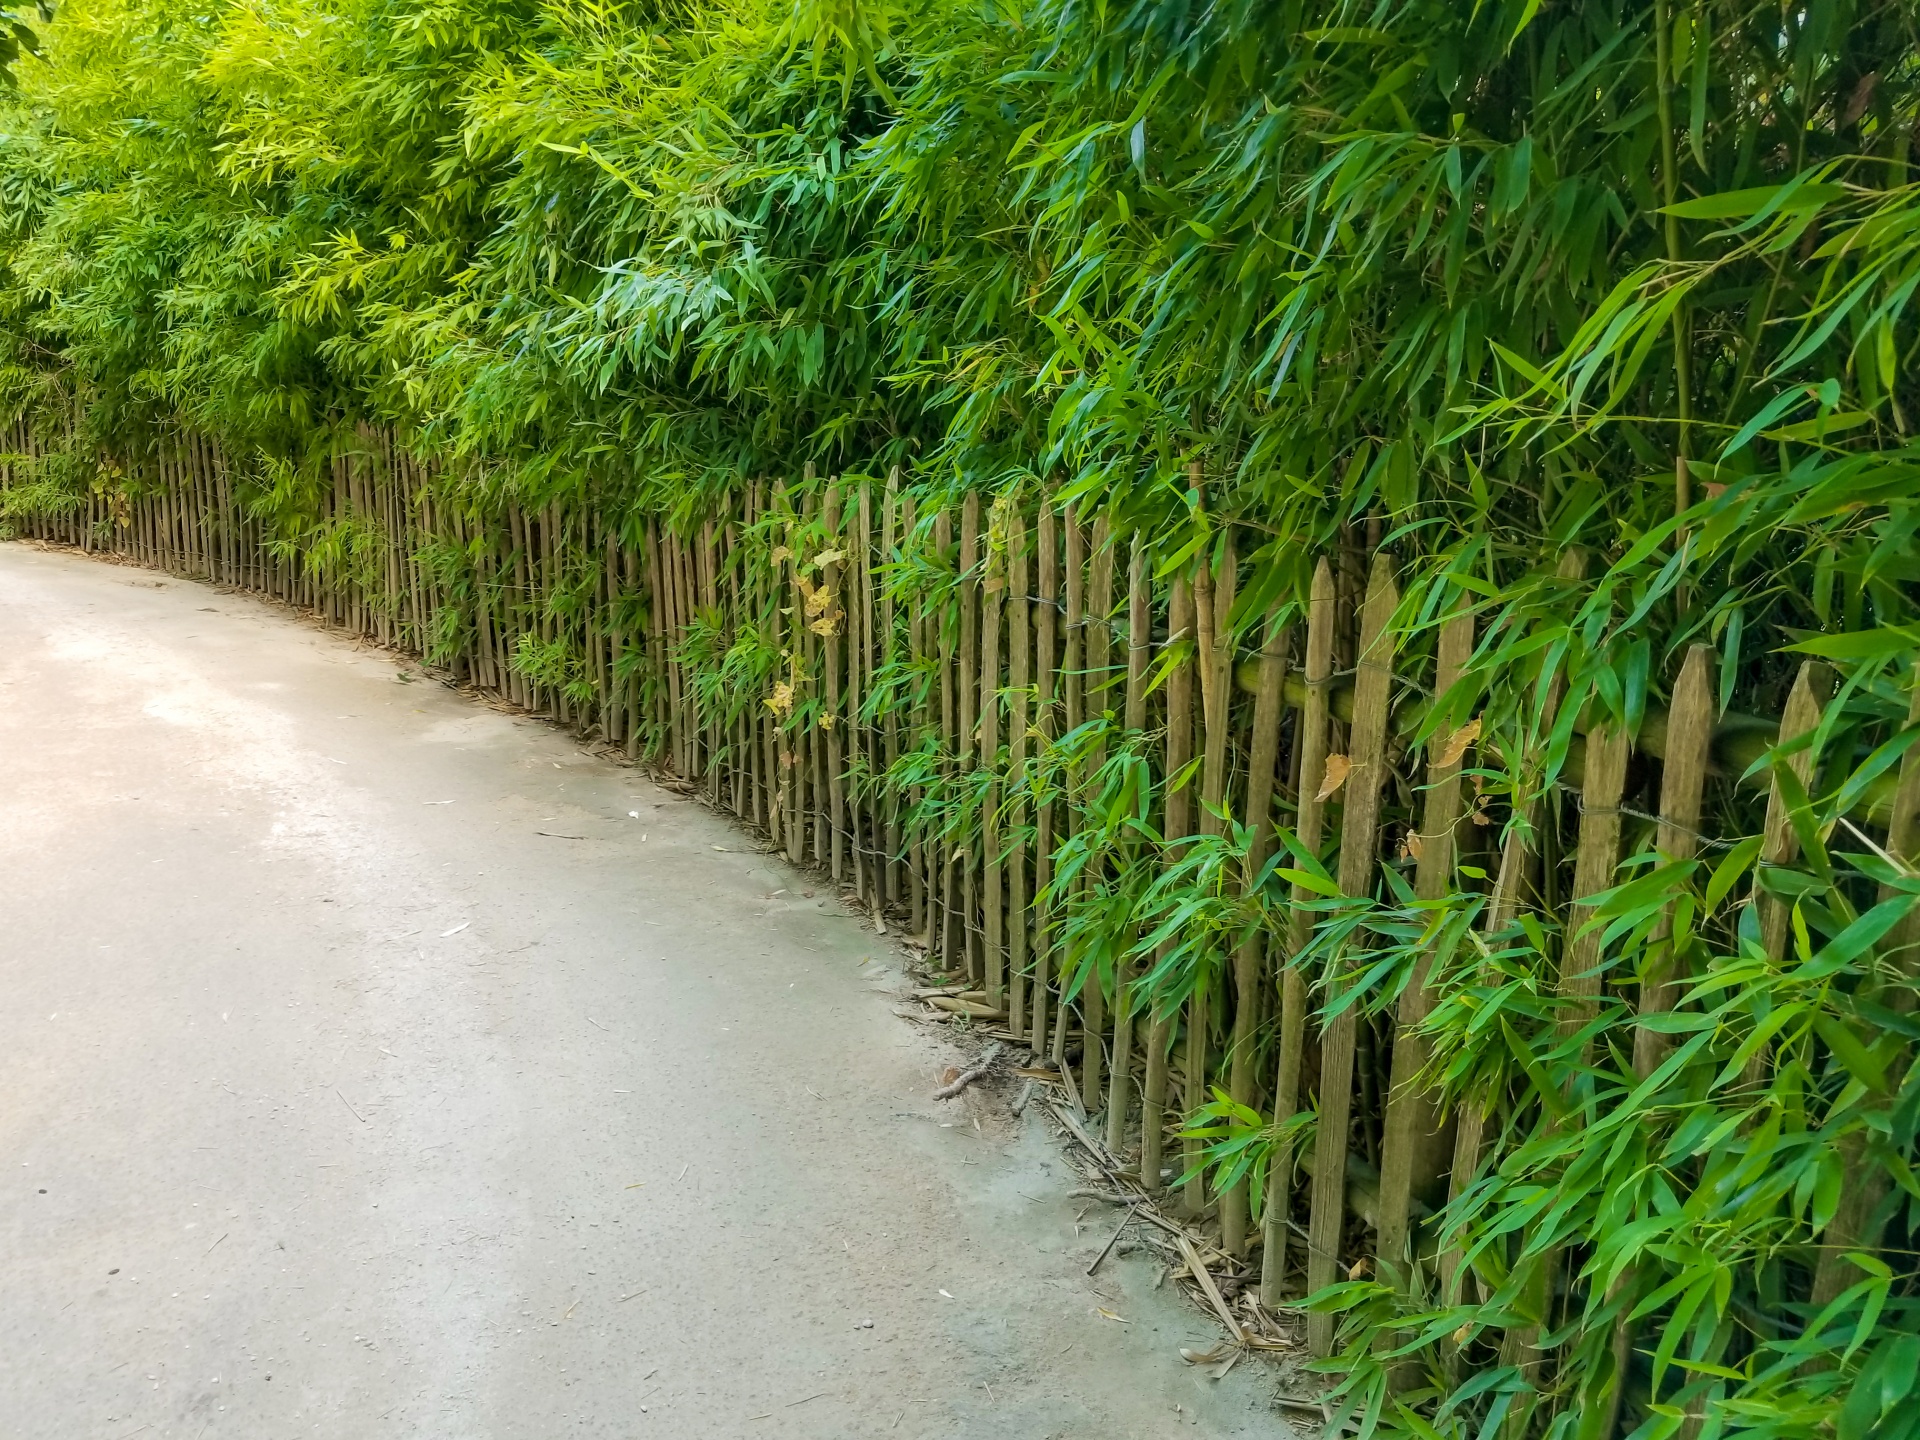 Bambusový plot